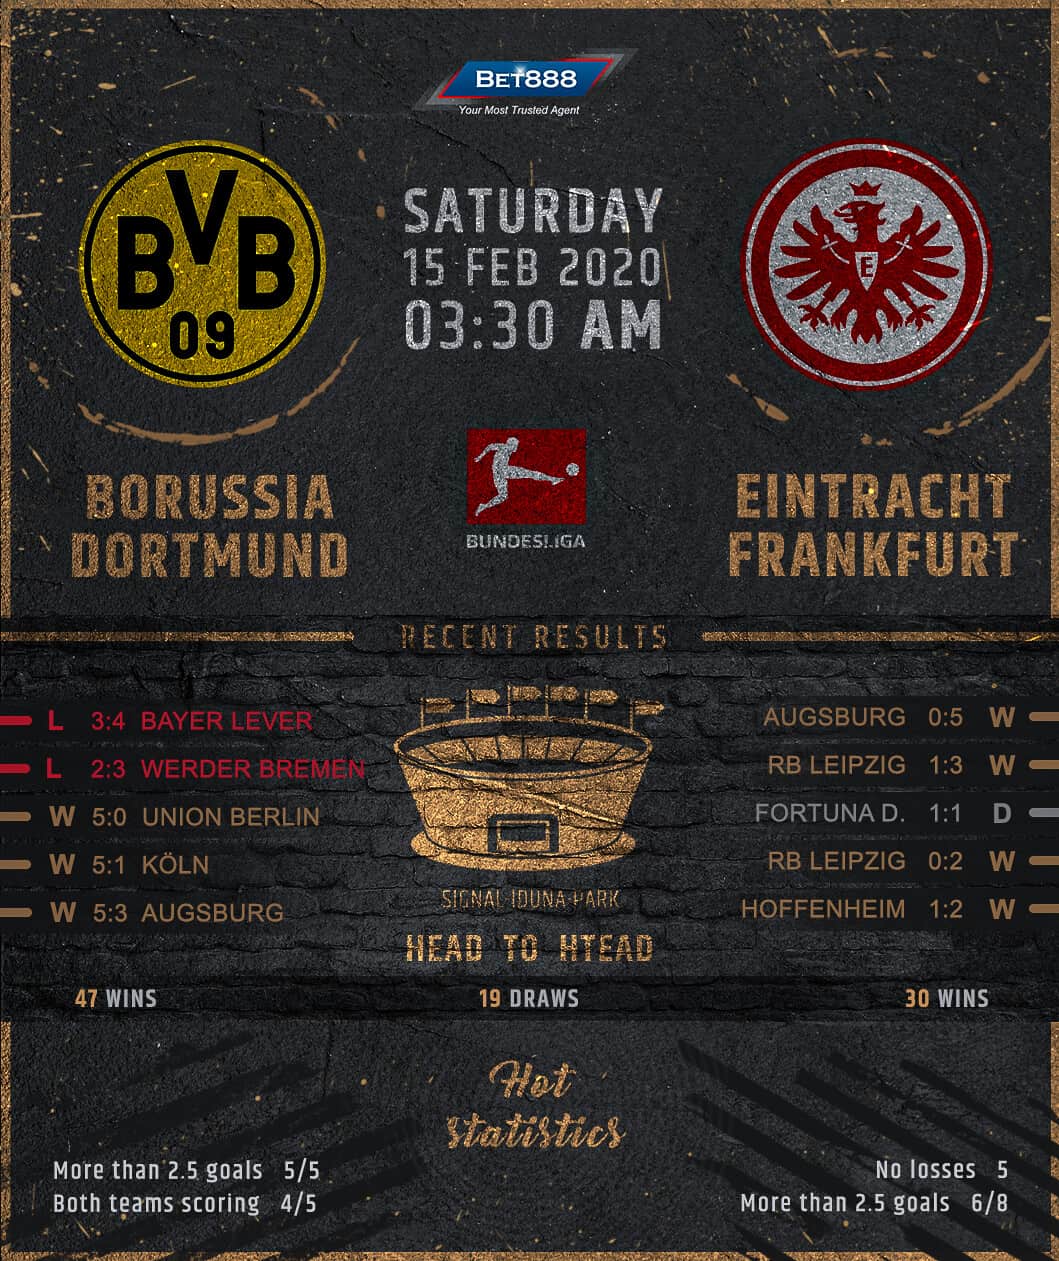 Borussia Dortmund vs Eintracht Frankfurt﻿ 15/02/20